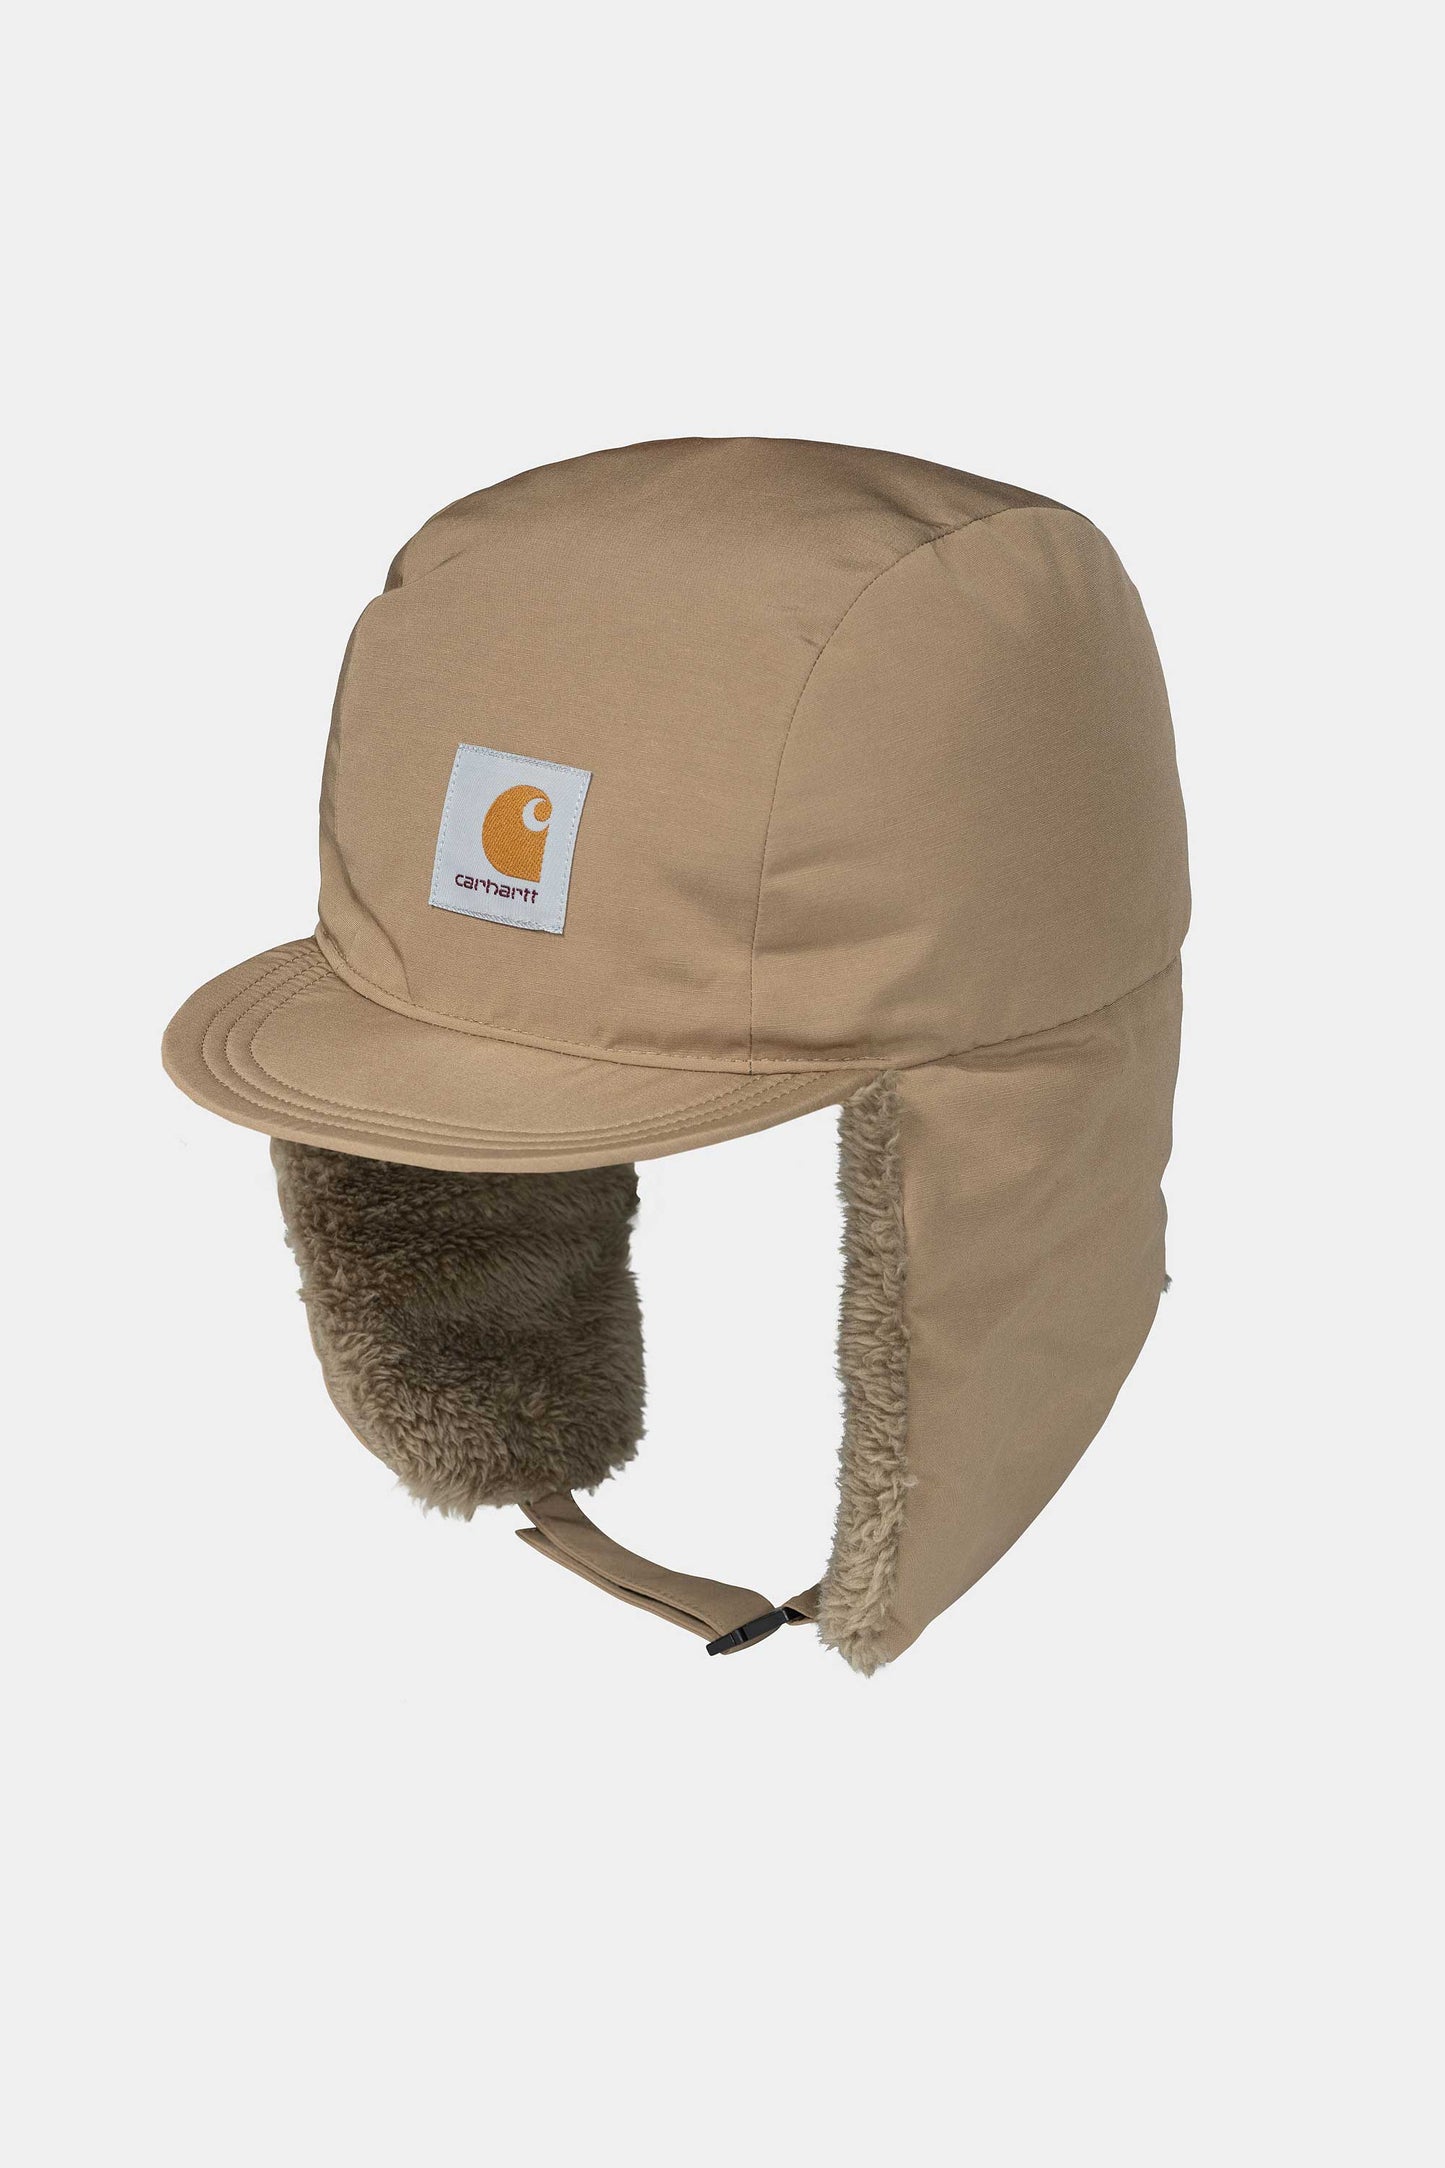 Carhartt Trapper Hats for Men